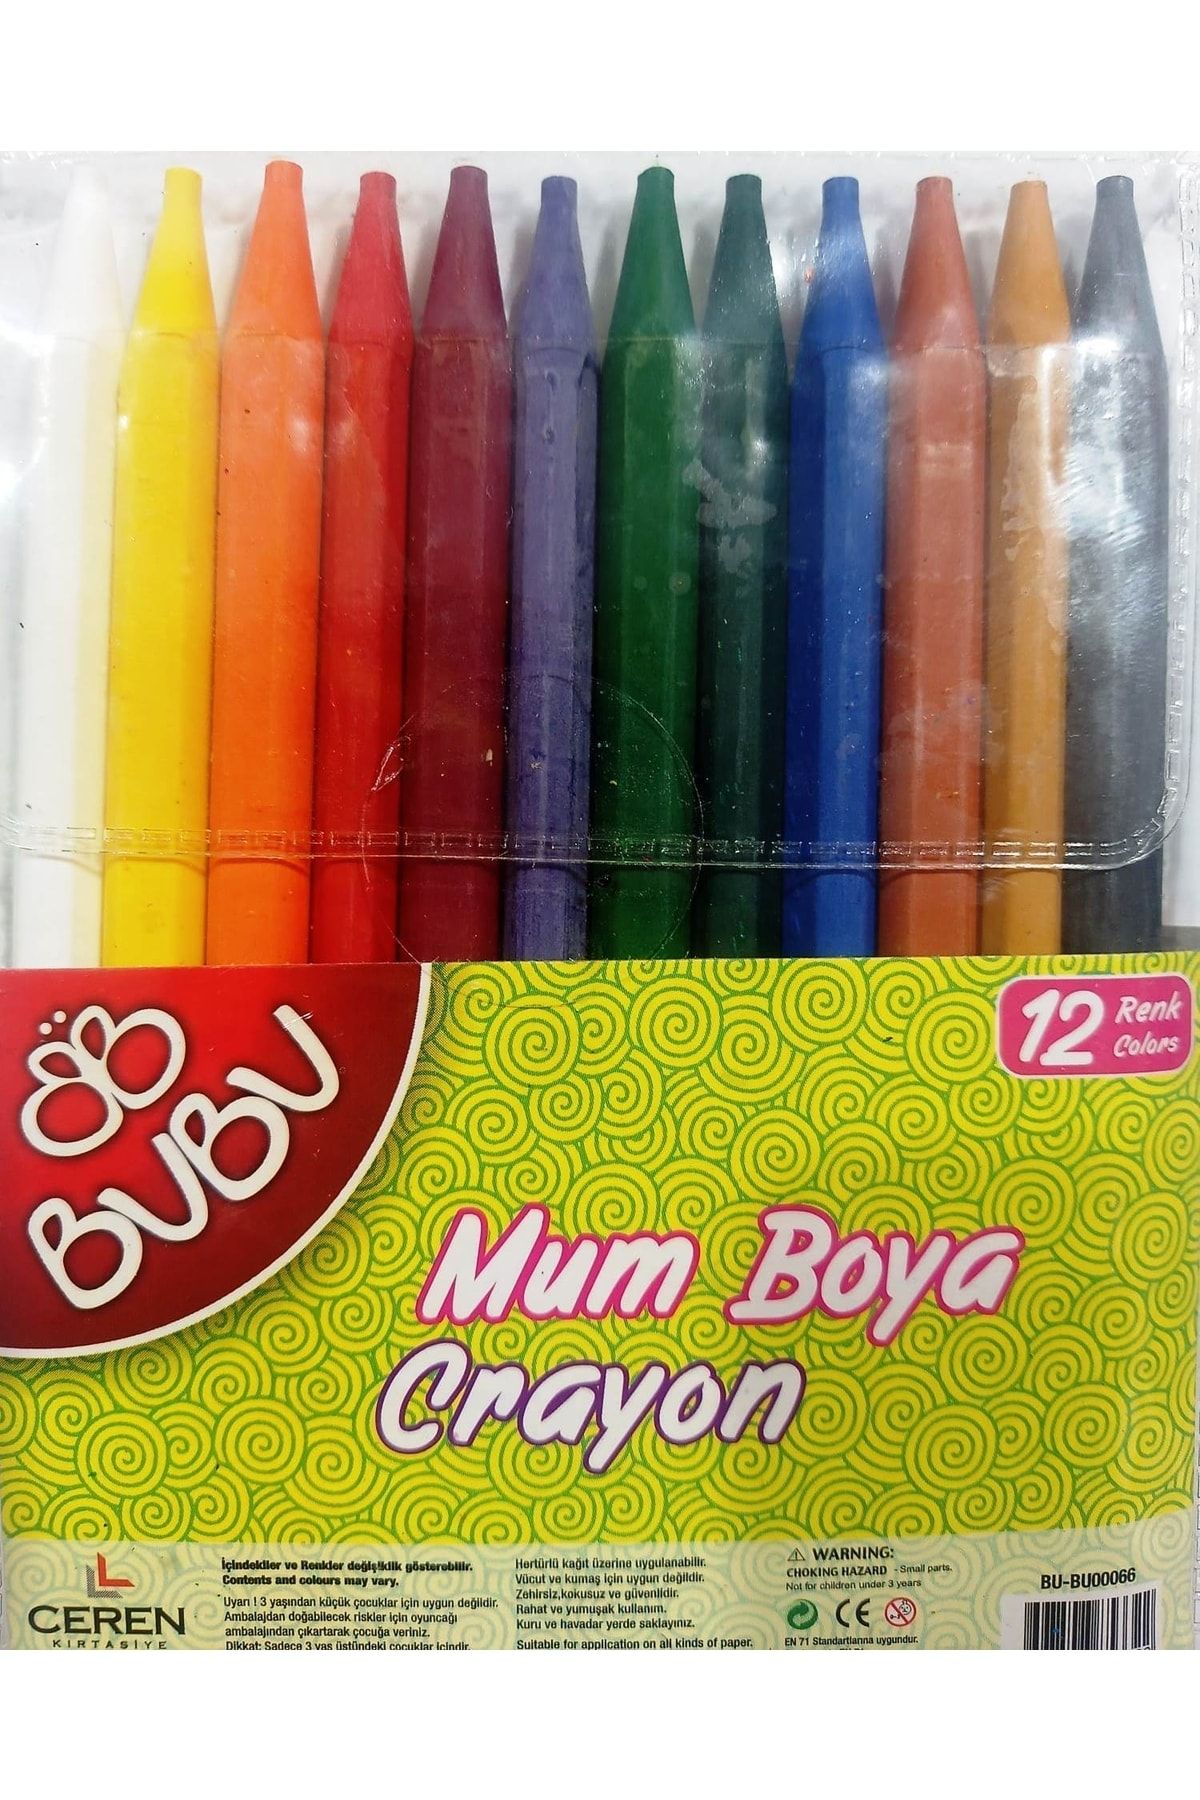 Bubu Bu-bu Crayon Yarım Boy Mum Boya 12 Renk